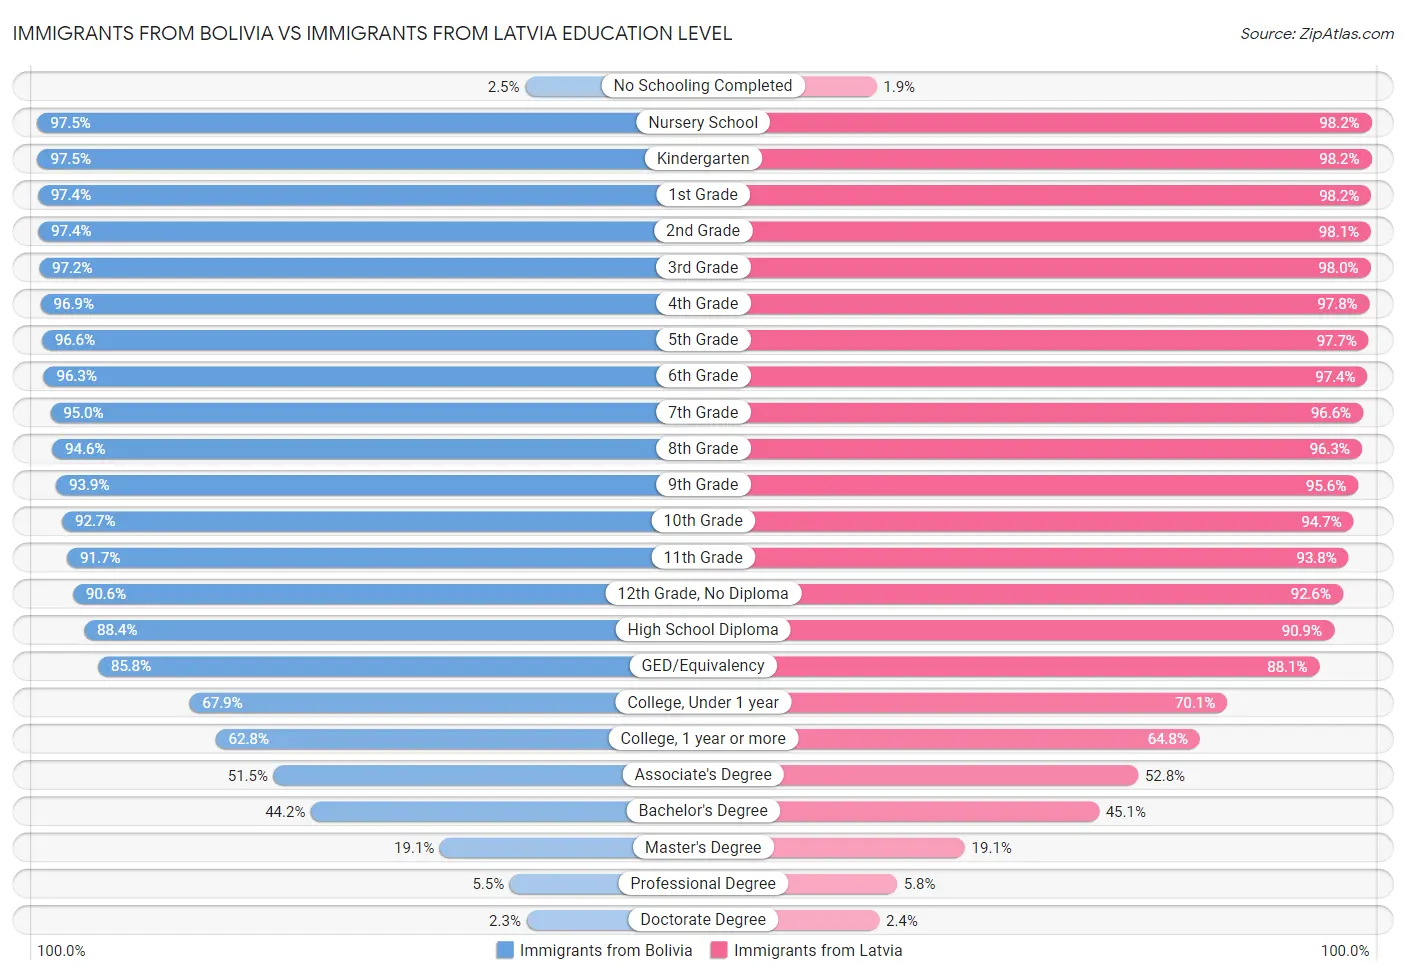 Immigrants from Bolivia vs Immigrants from Latvia Education Level